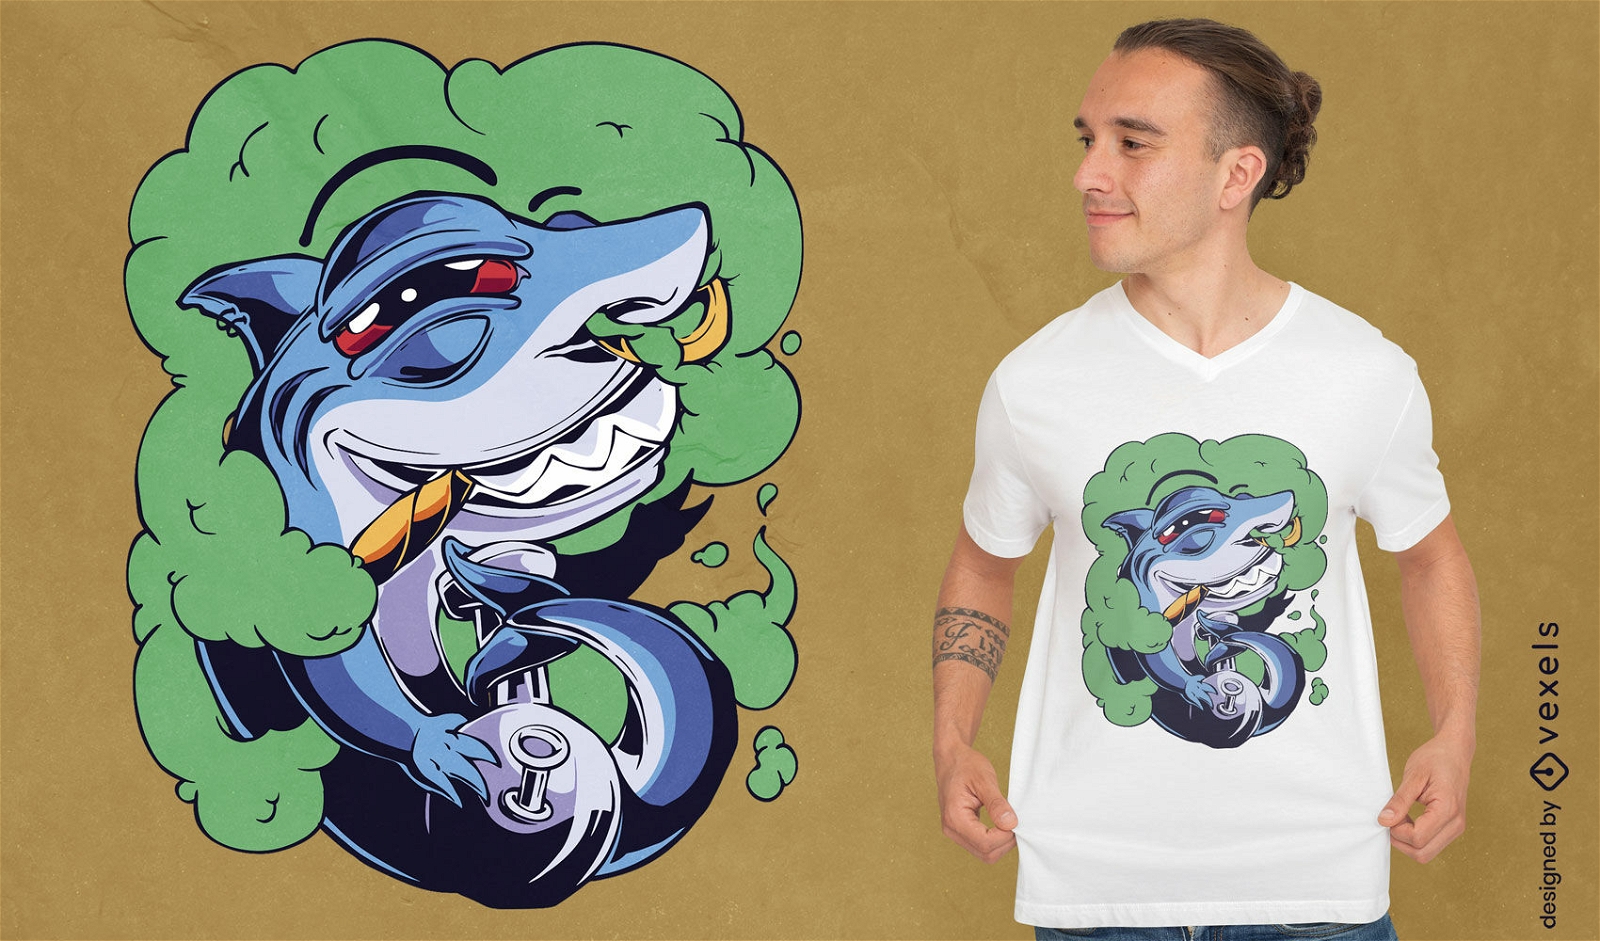 Dise?o de camiseta para fumar animales marinos de tibur?n